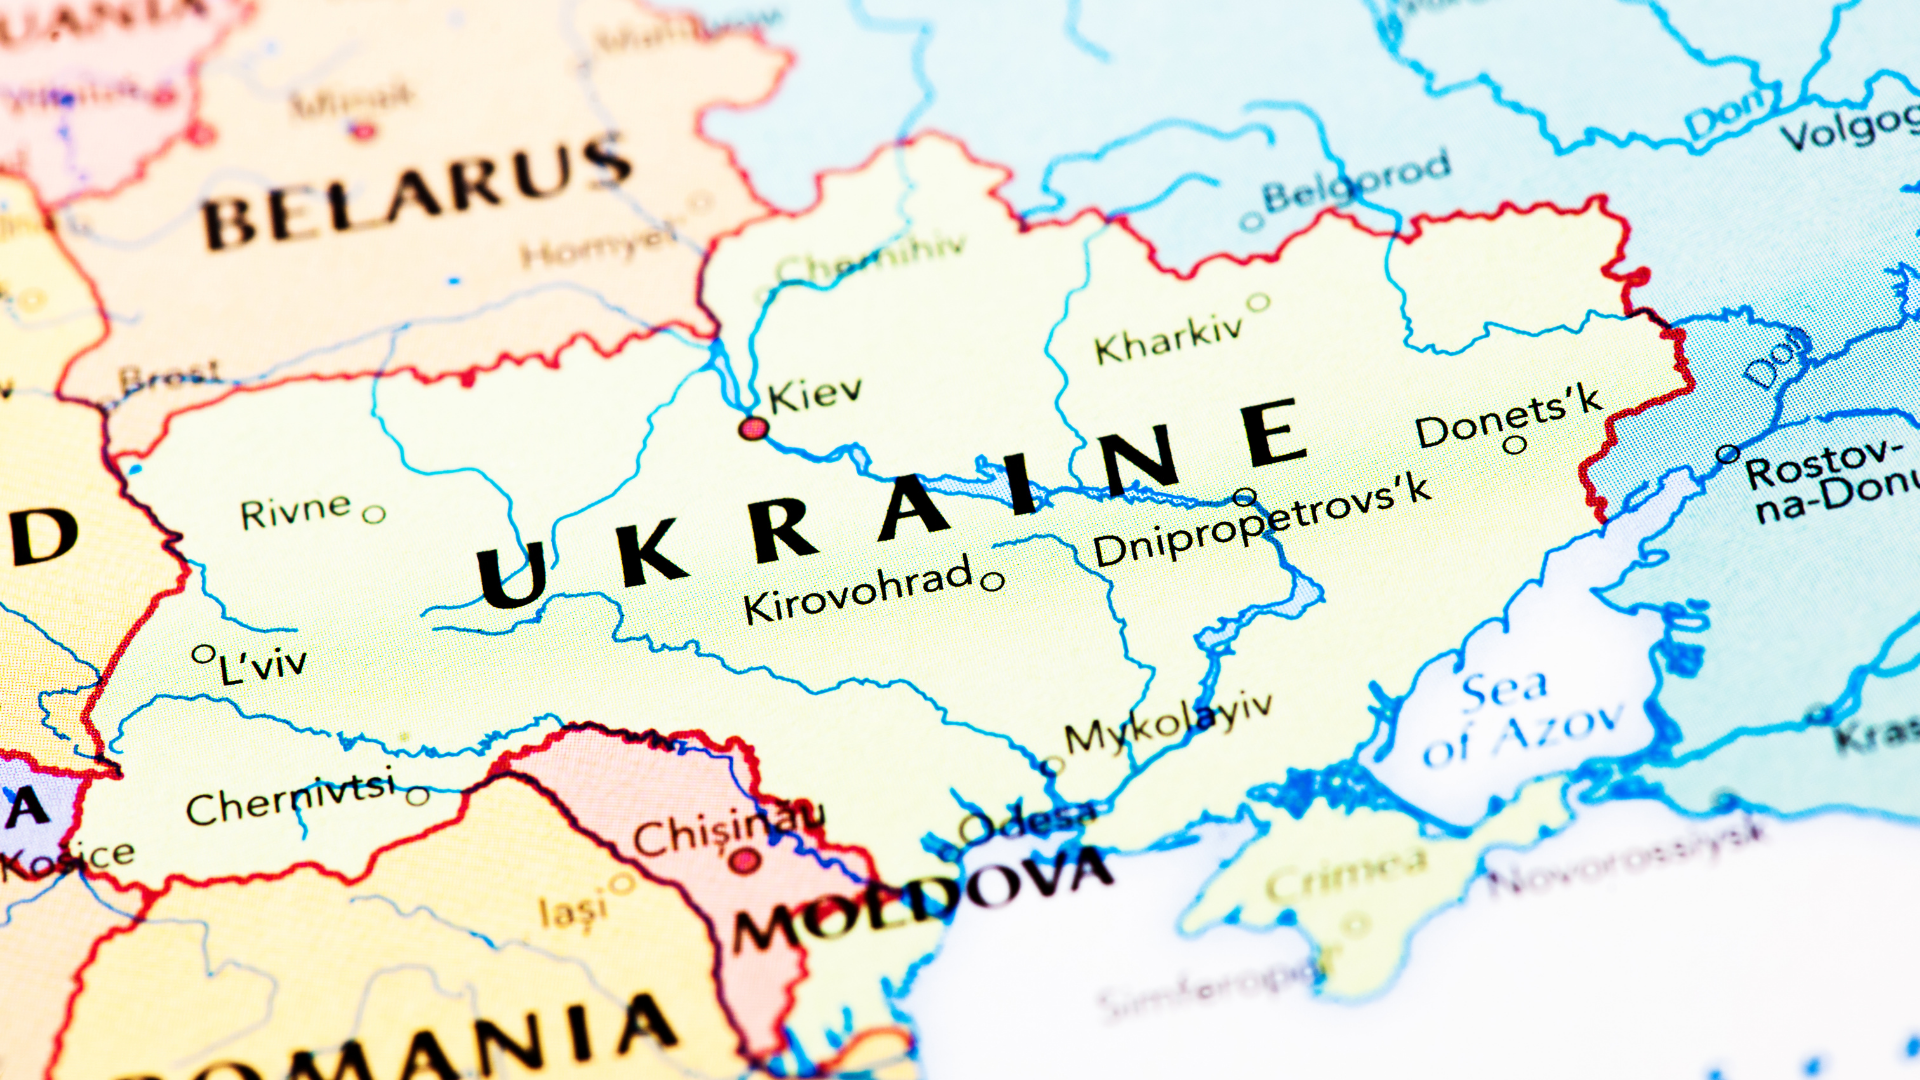 Markets fearful as Ukraine situation escalates